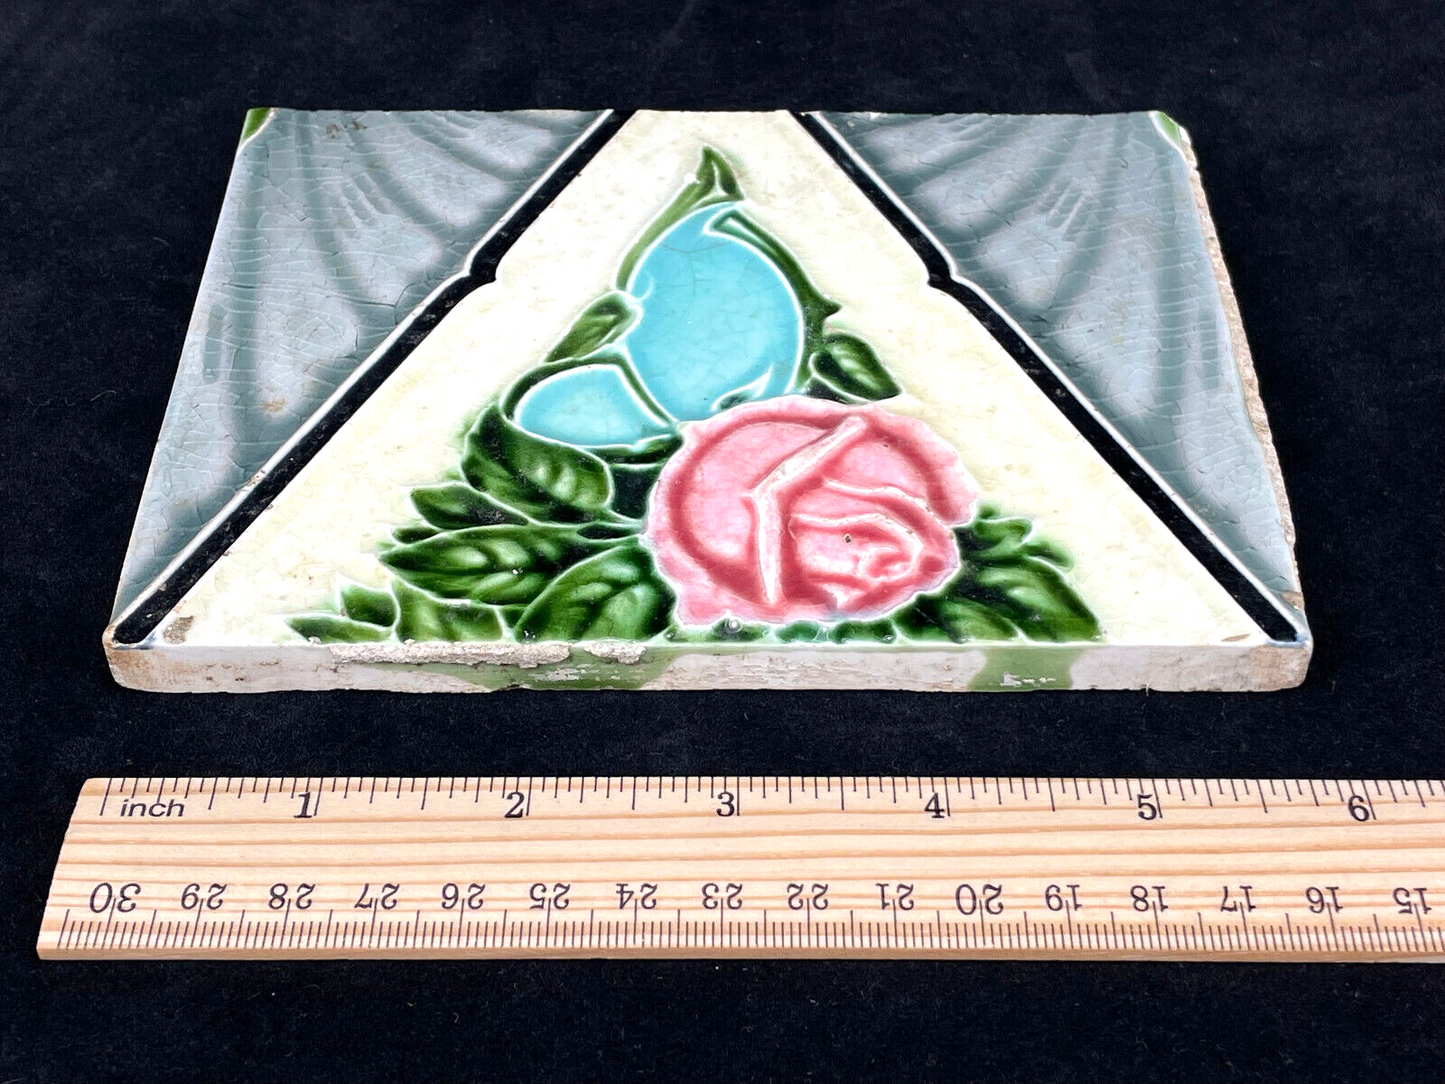 Antique Art Nouveau Era Majolica Ceramic Art Tile with Rose Geometric Patterns